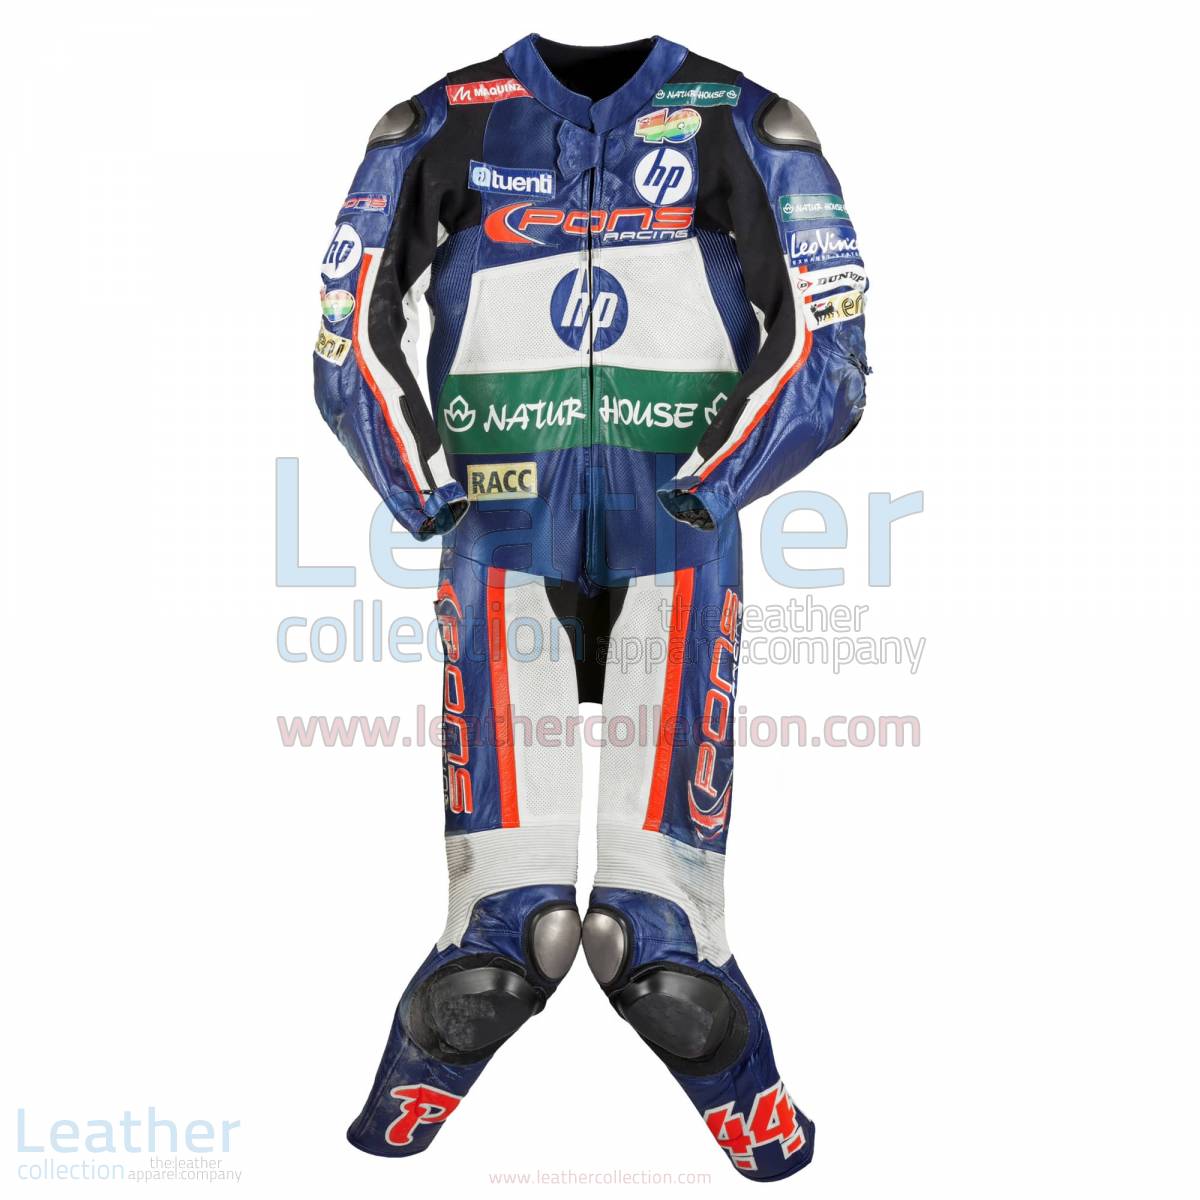 Pol Espargaro Kalex 2012 Motorcycle Racing Suit